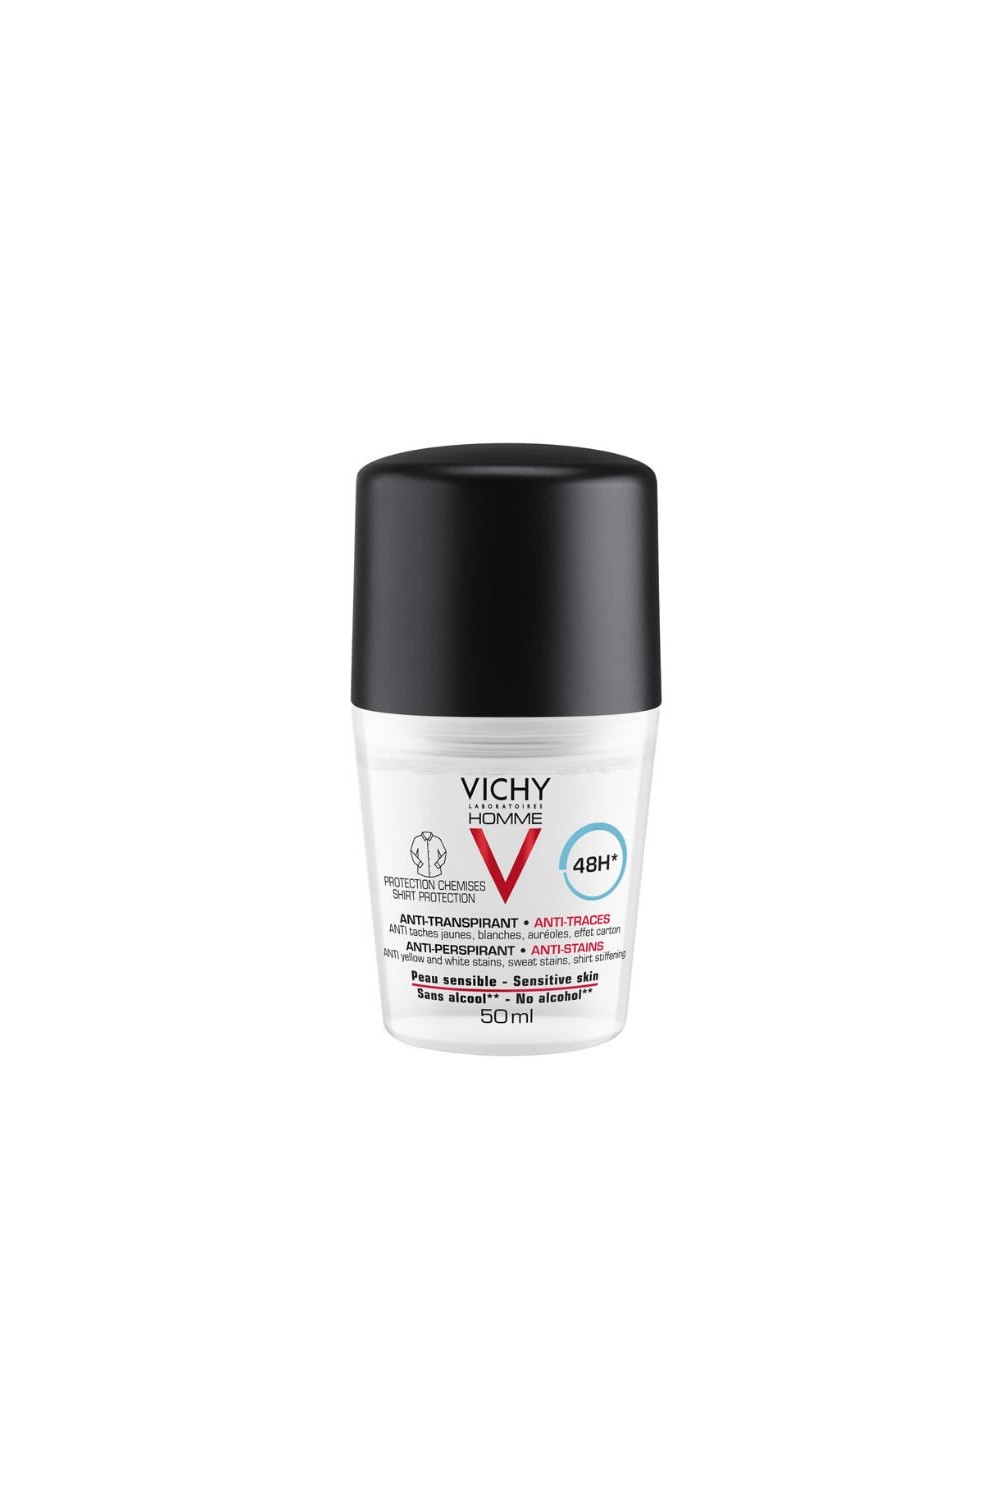 Vichy Homme Deodorant Anti-Perspirant Anti-Stains Sensitive Skin 50ml